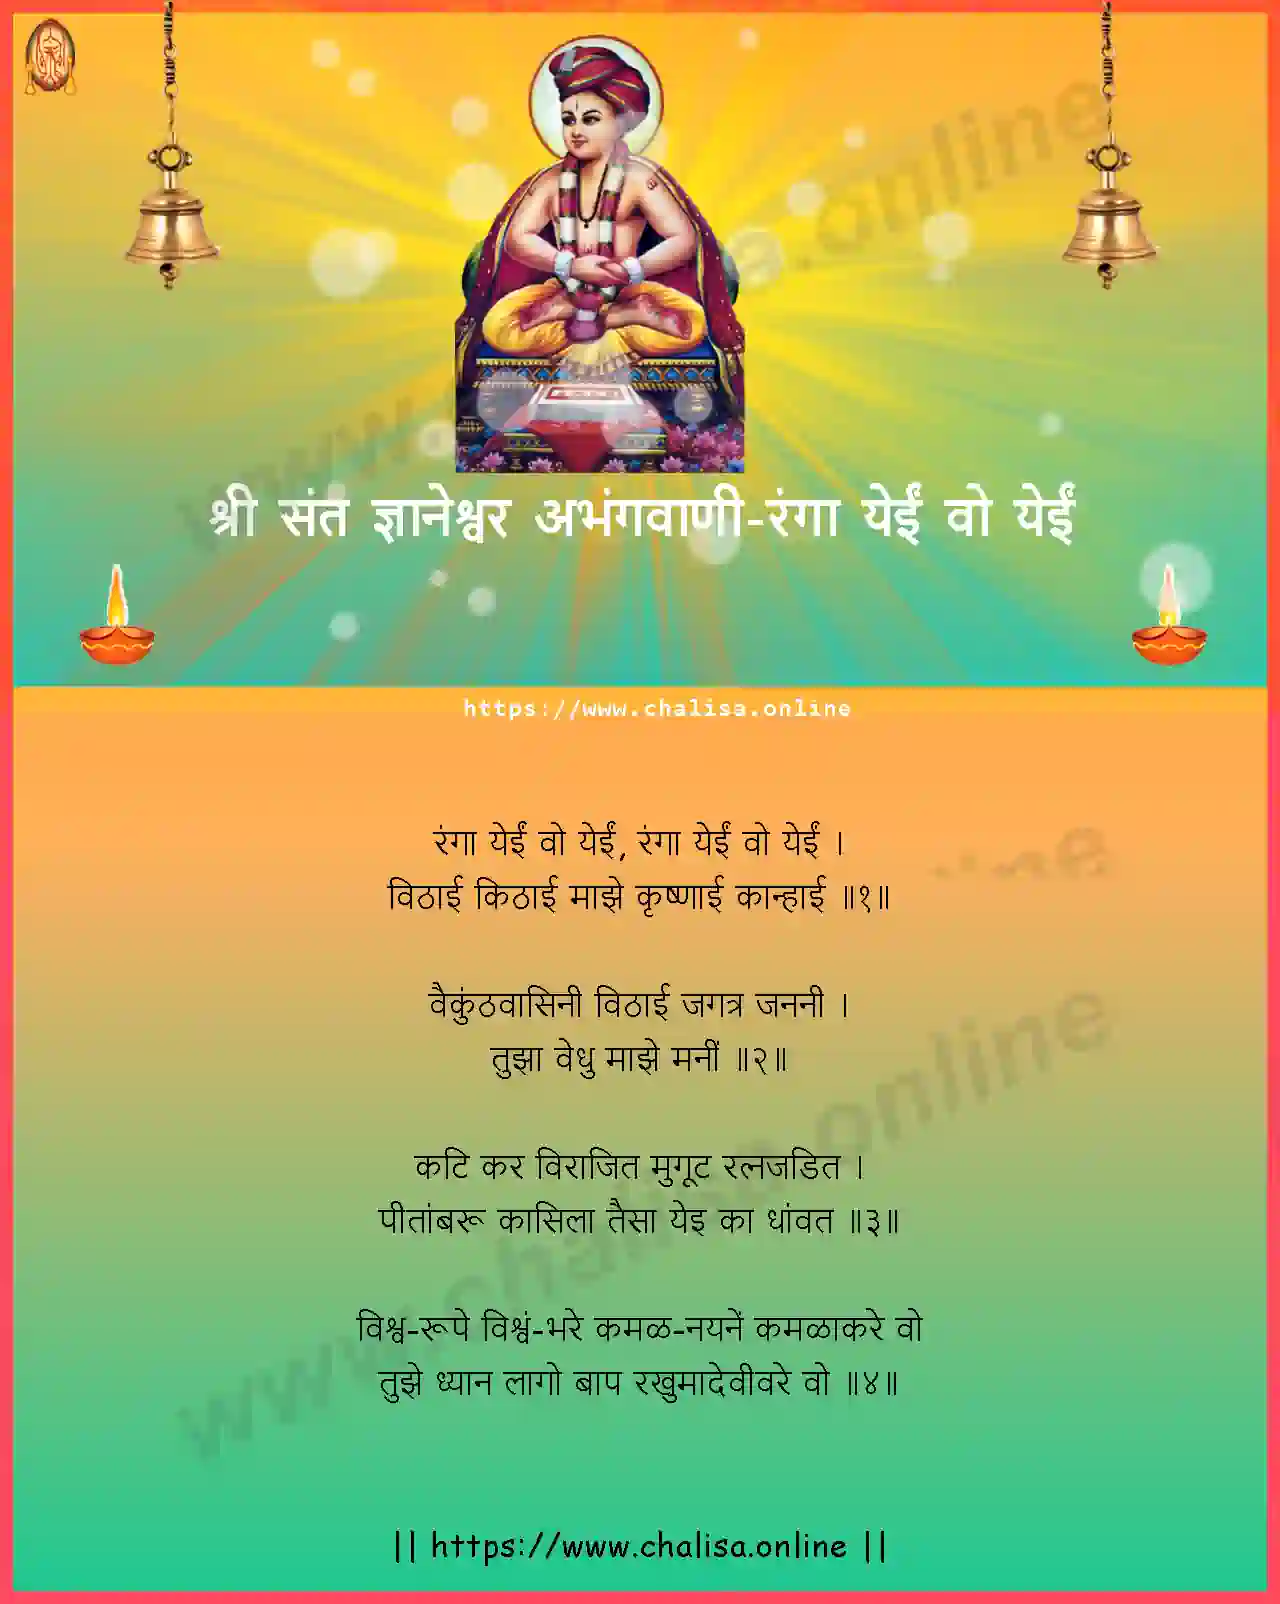 ranga-yei-vo-yei-shri-sant-dnyaneshwar-abhang-marathi-lyrics-download